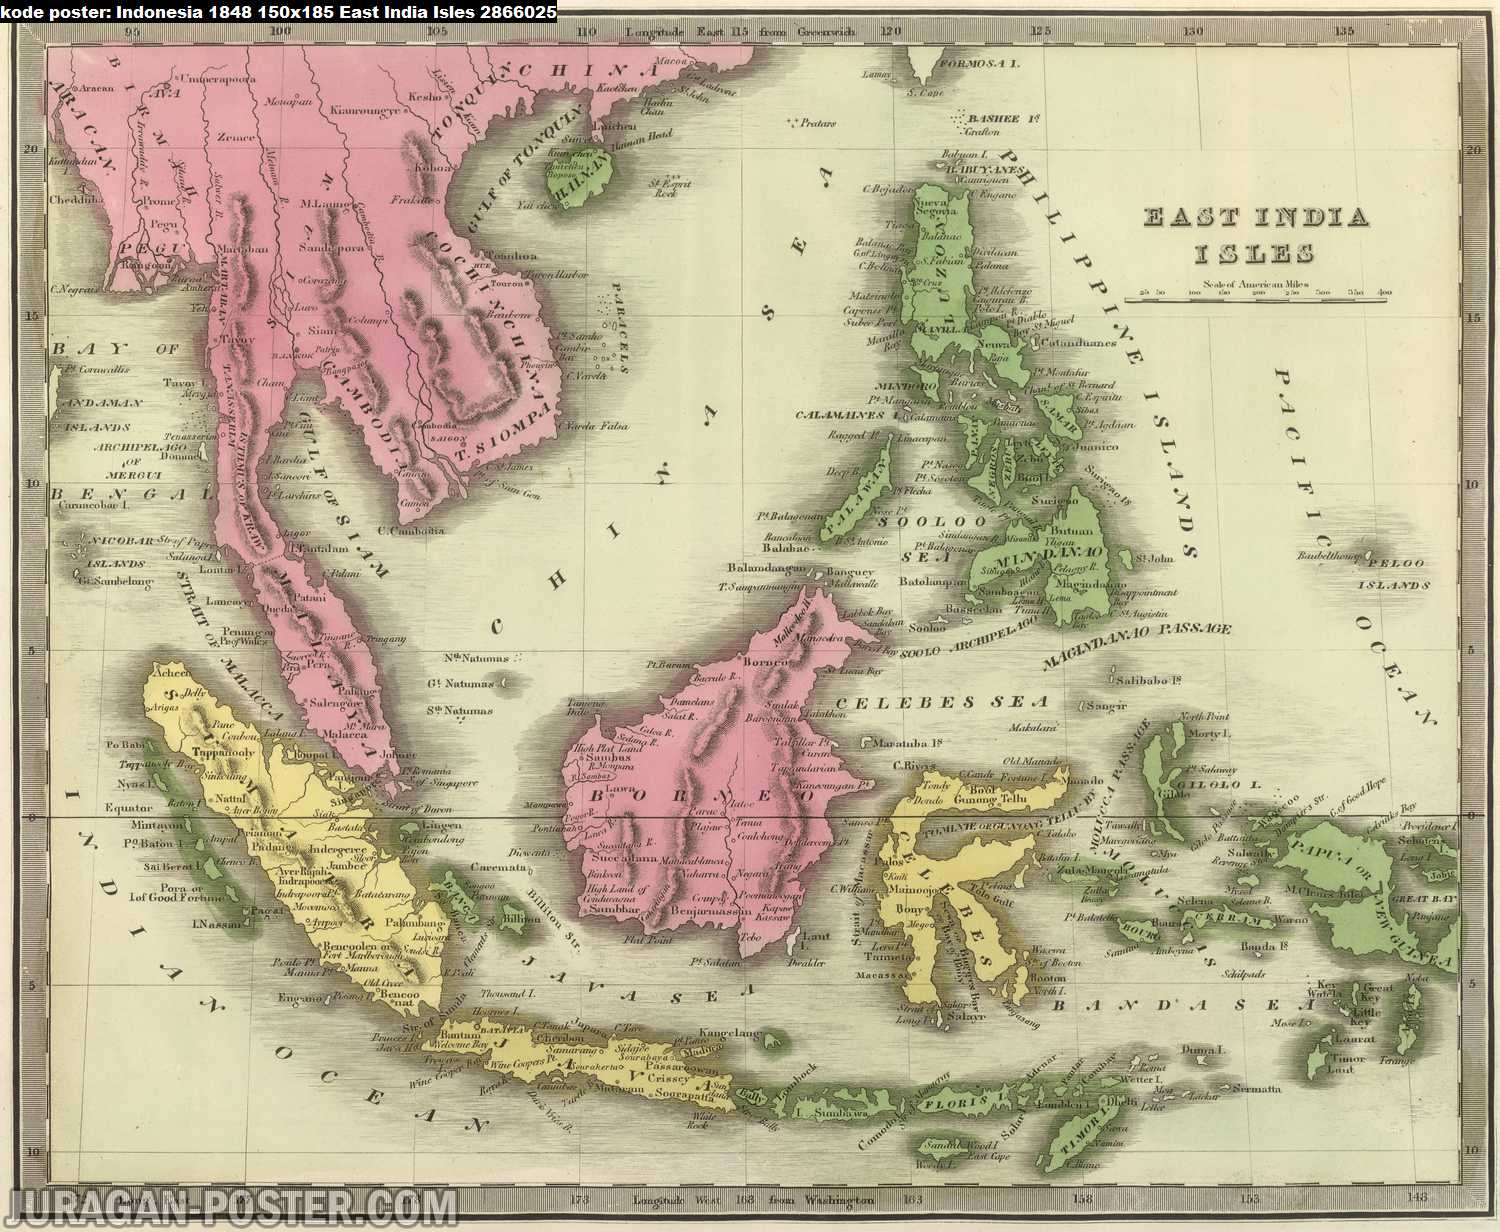 peta indonesia kuno tahun 1848